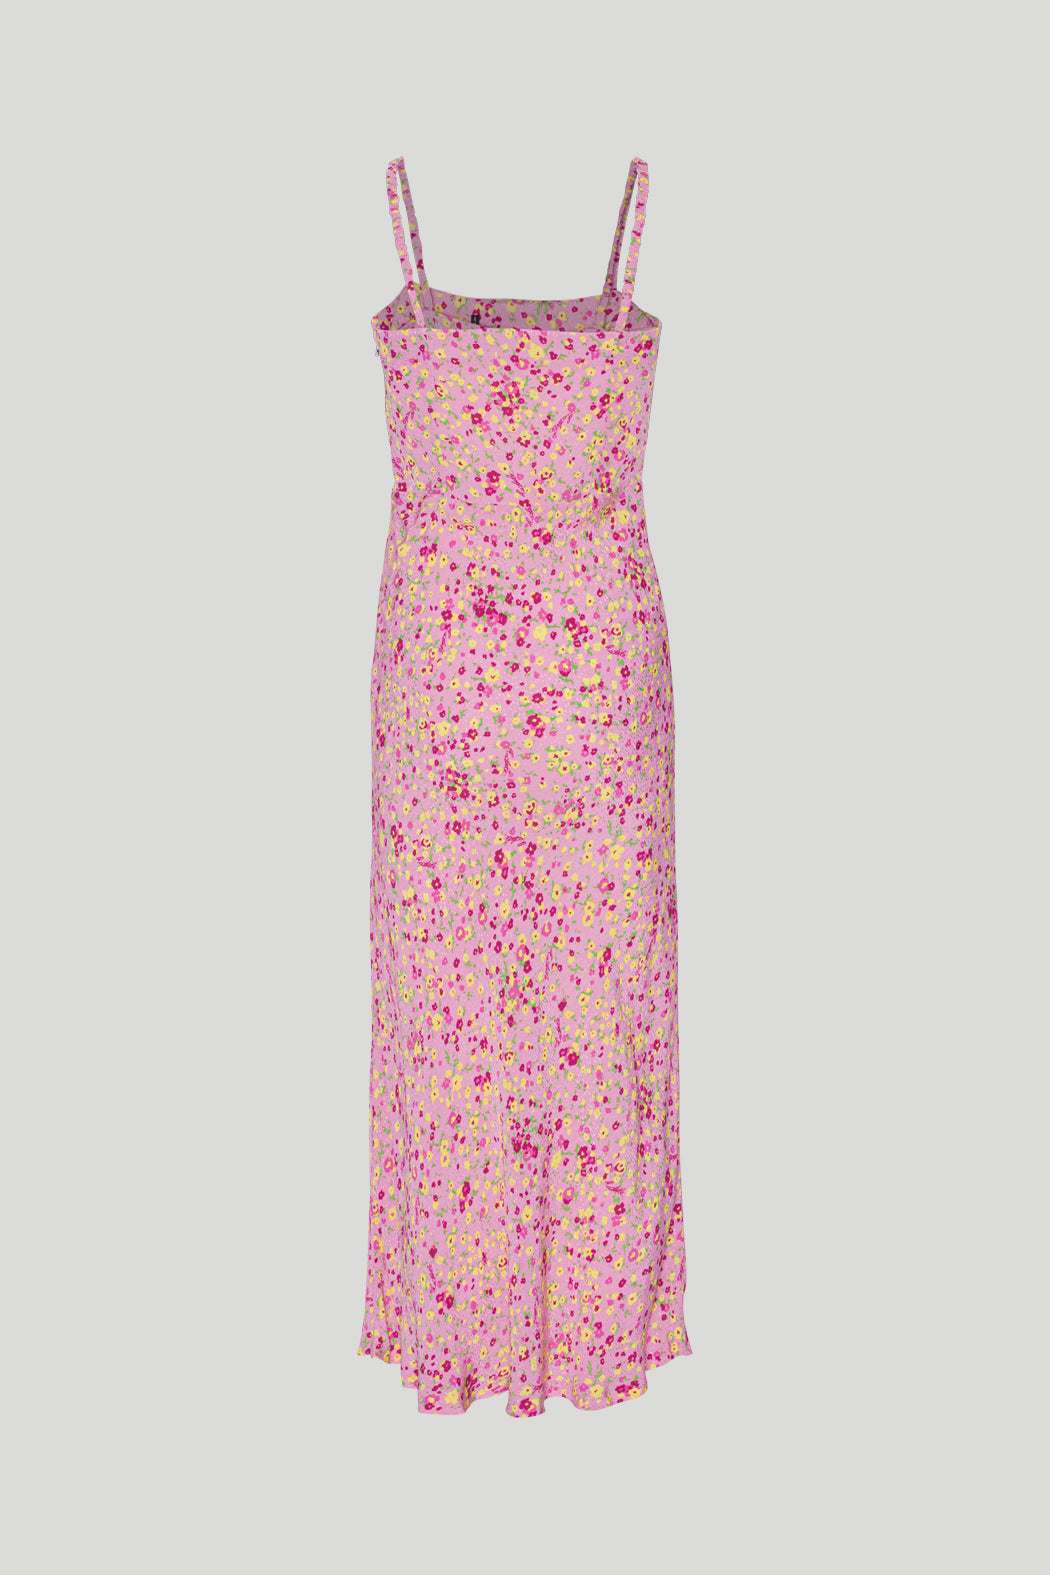 ROTATE BIRGER CHRISTENSEN Jacquard Midi Slip Dress in Pink Print